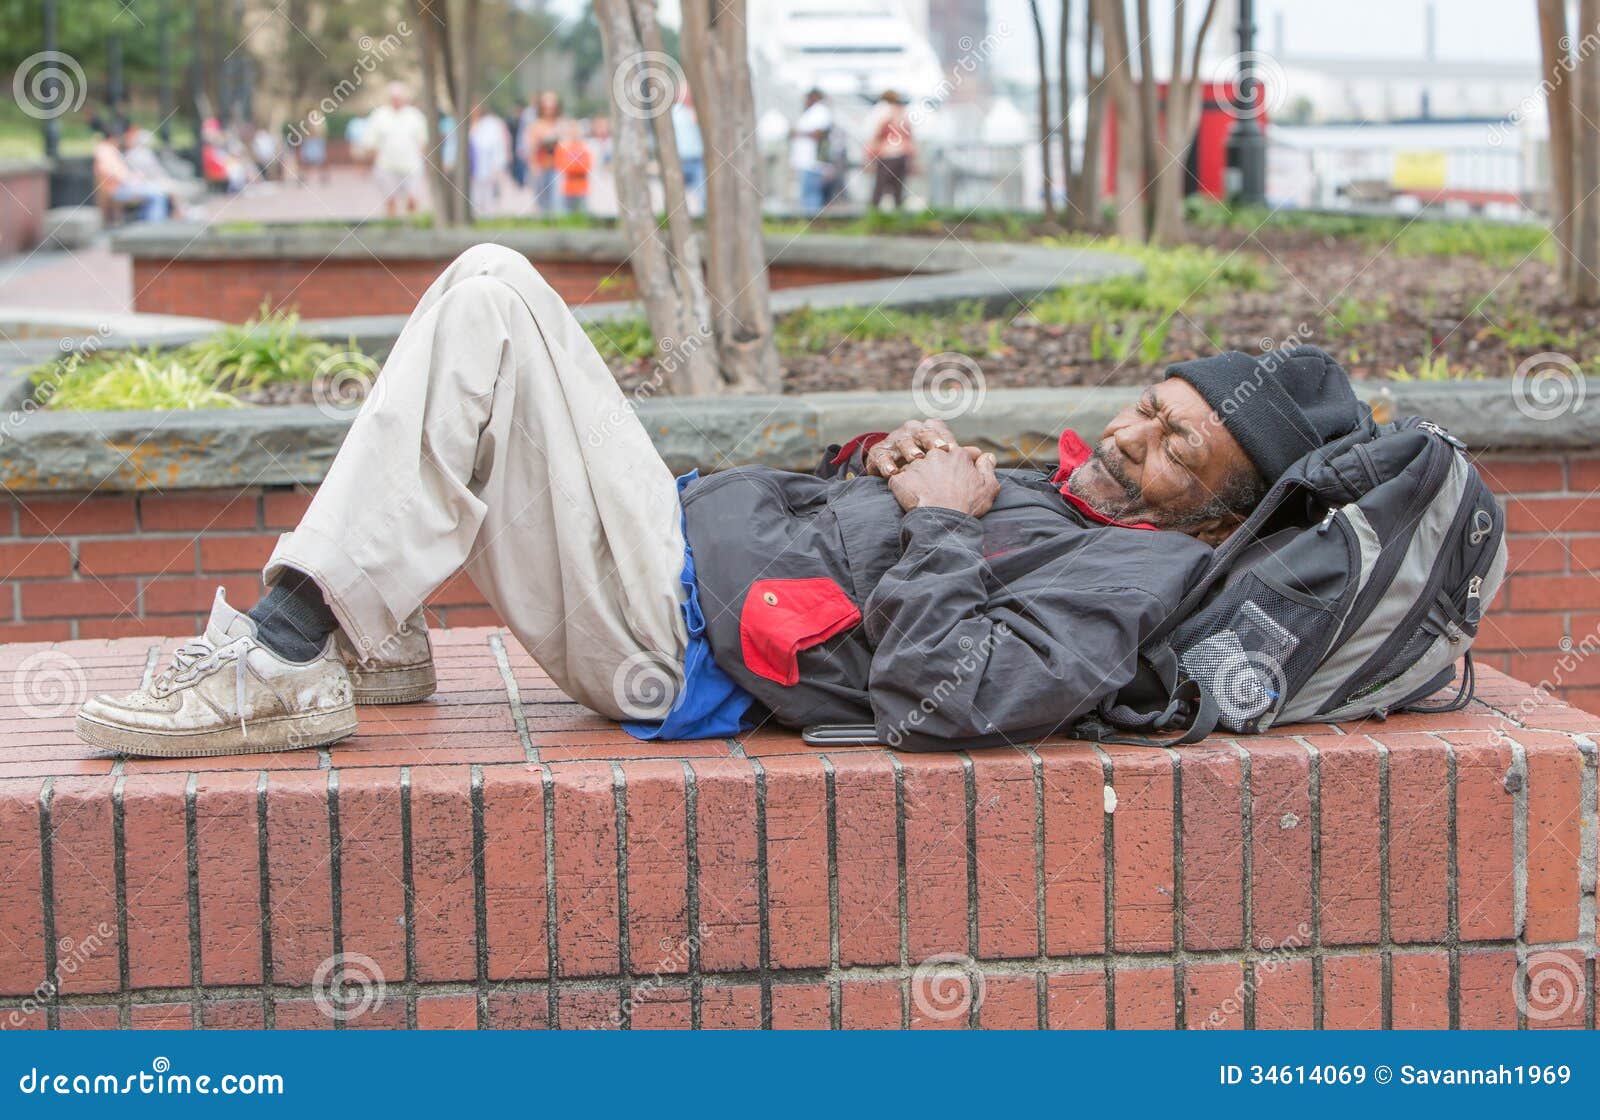 african american homeless man sleeping